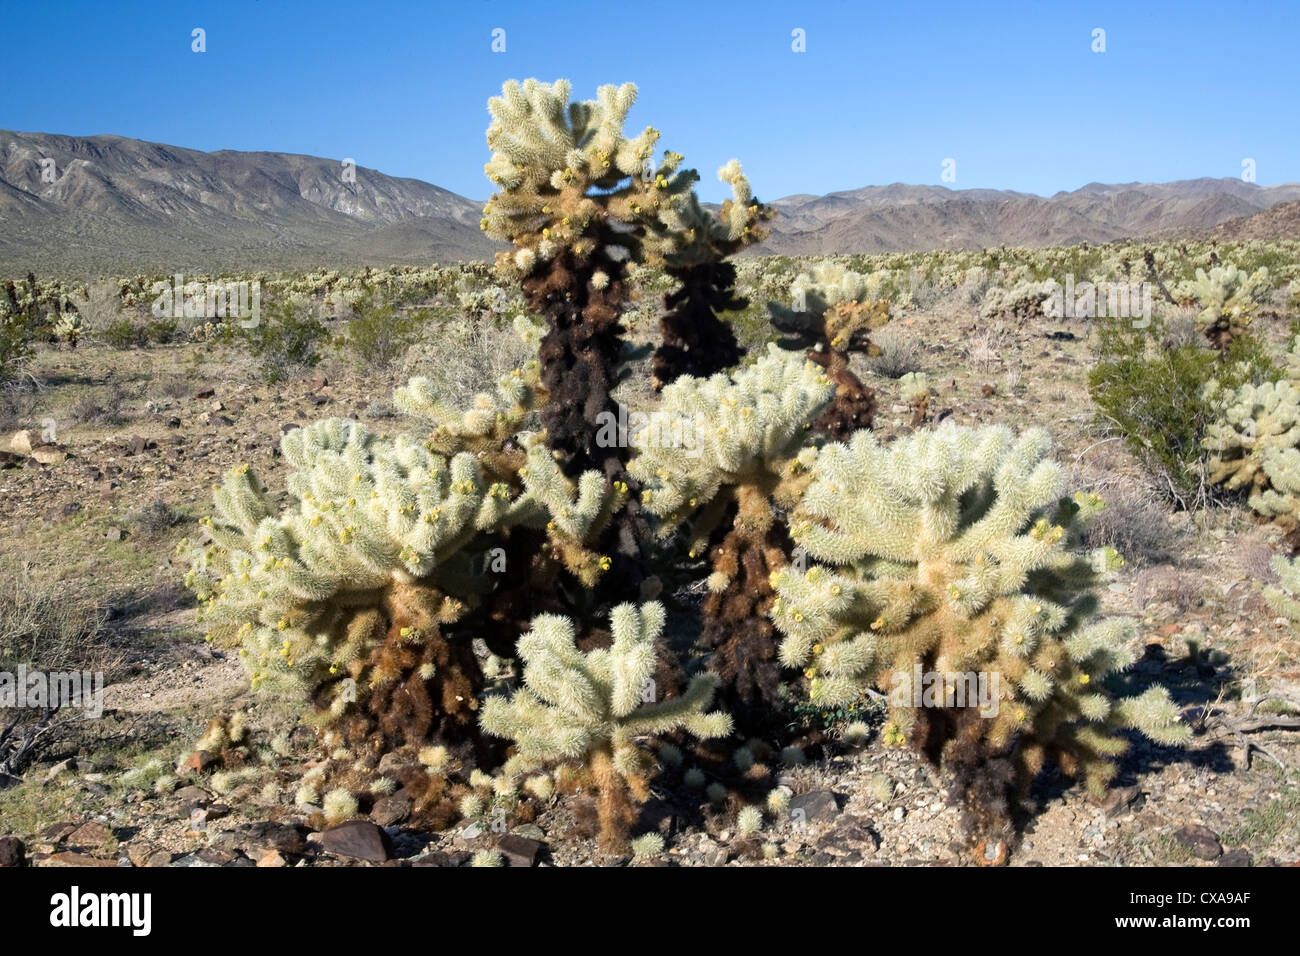 Teddy bear cholla cactus (Opuntia bigelovii) in Joshua Tree National Park, California. Stock Photo